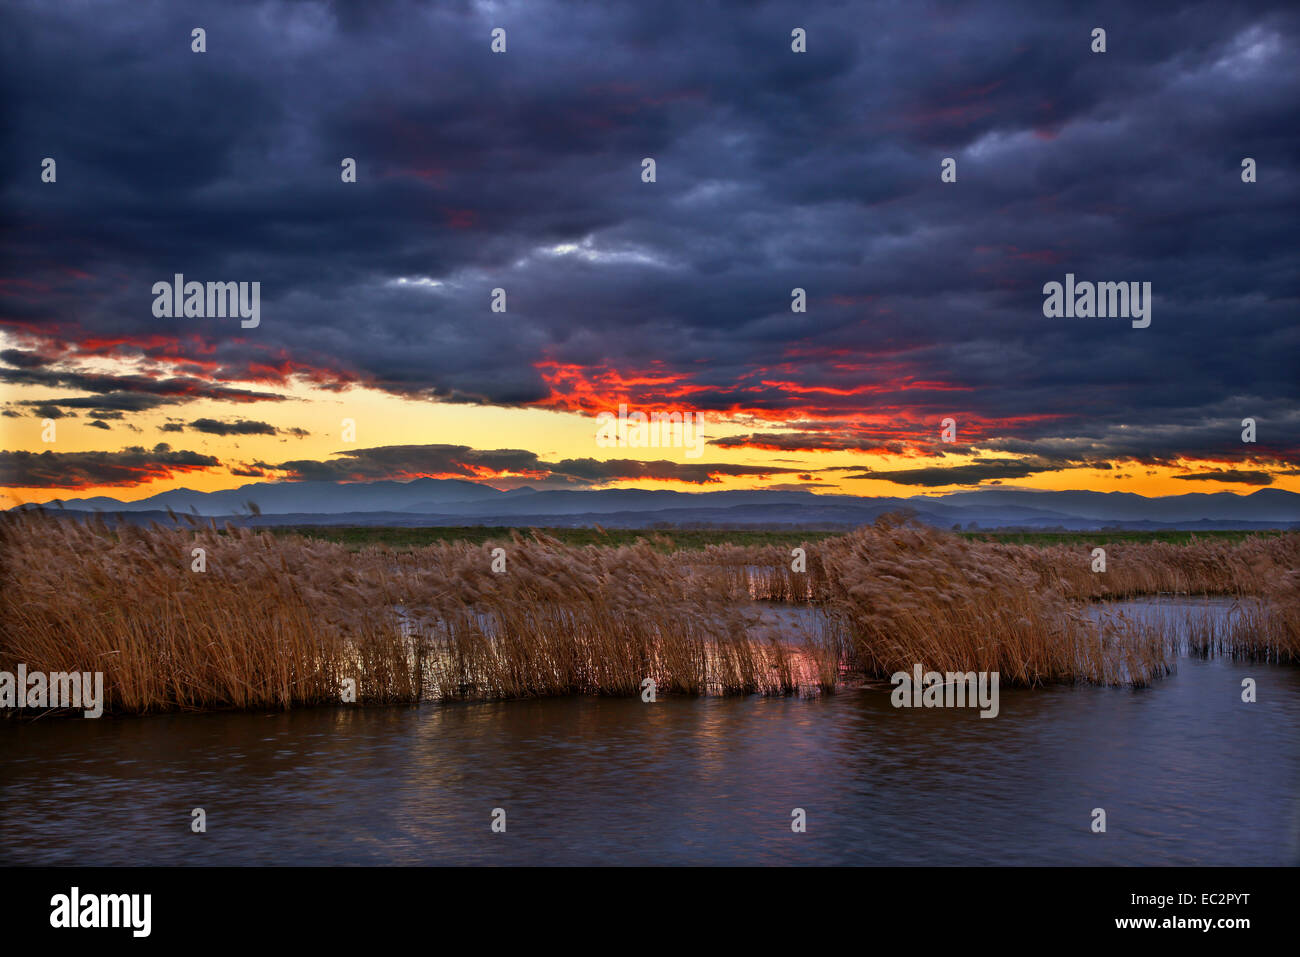 Sonnenuntergang am Delta des Aliakmonas Fluß, Pieria - Imathia, Mazedonien, Griechenland. Stockfoto